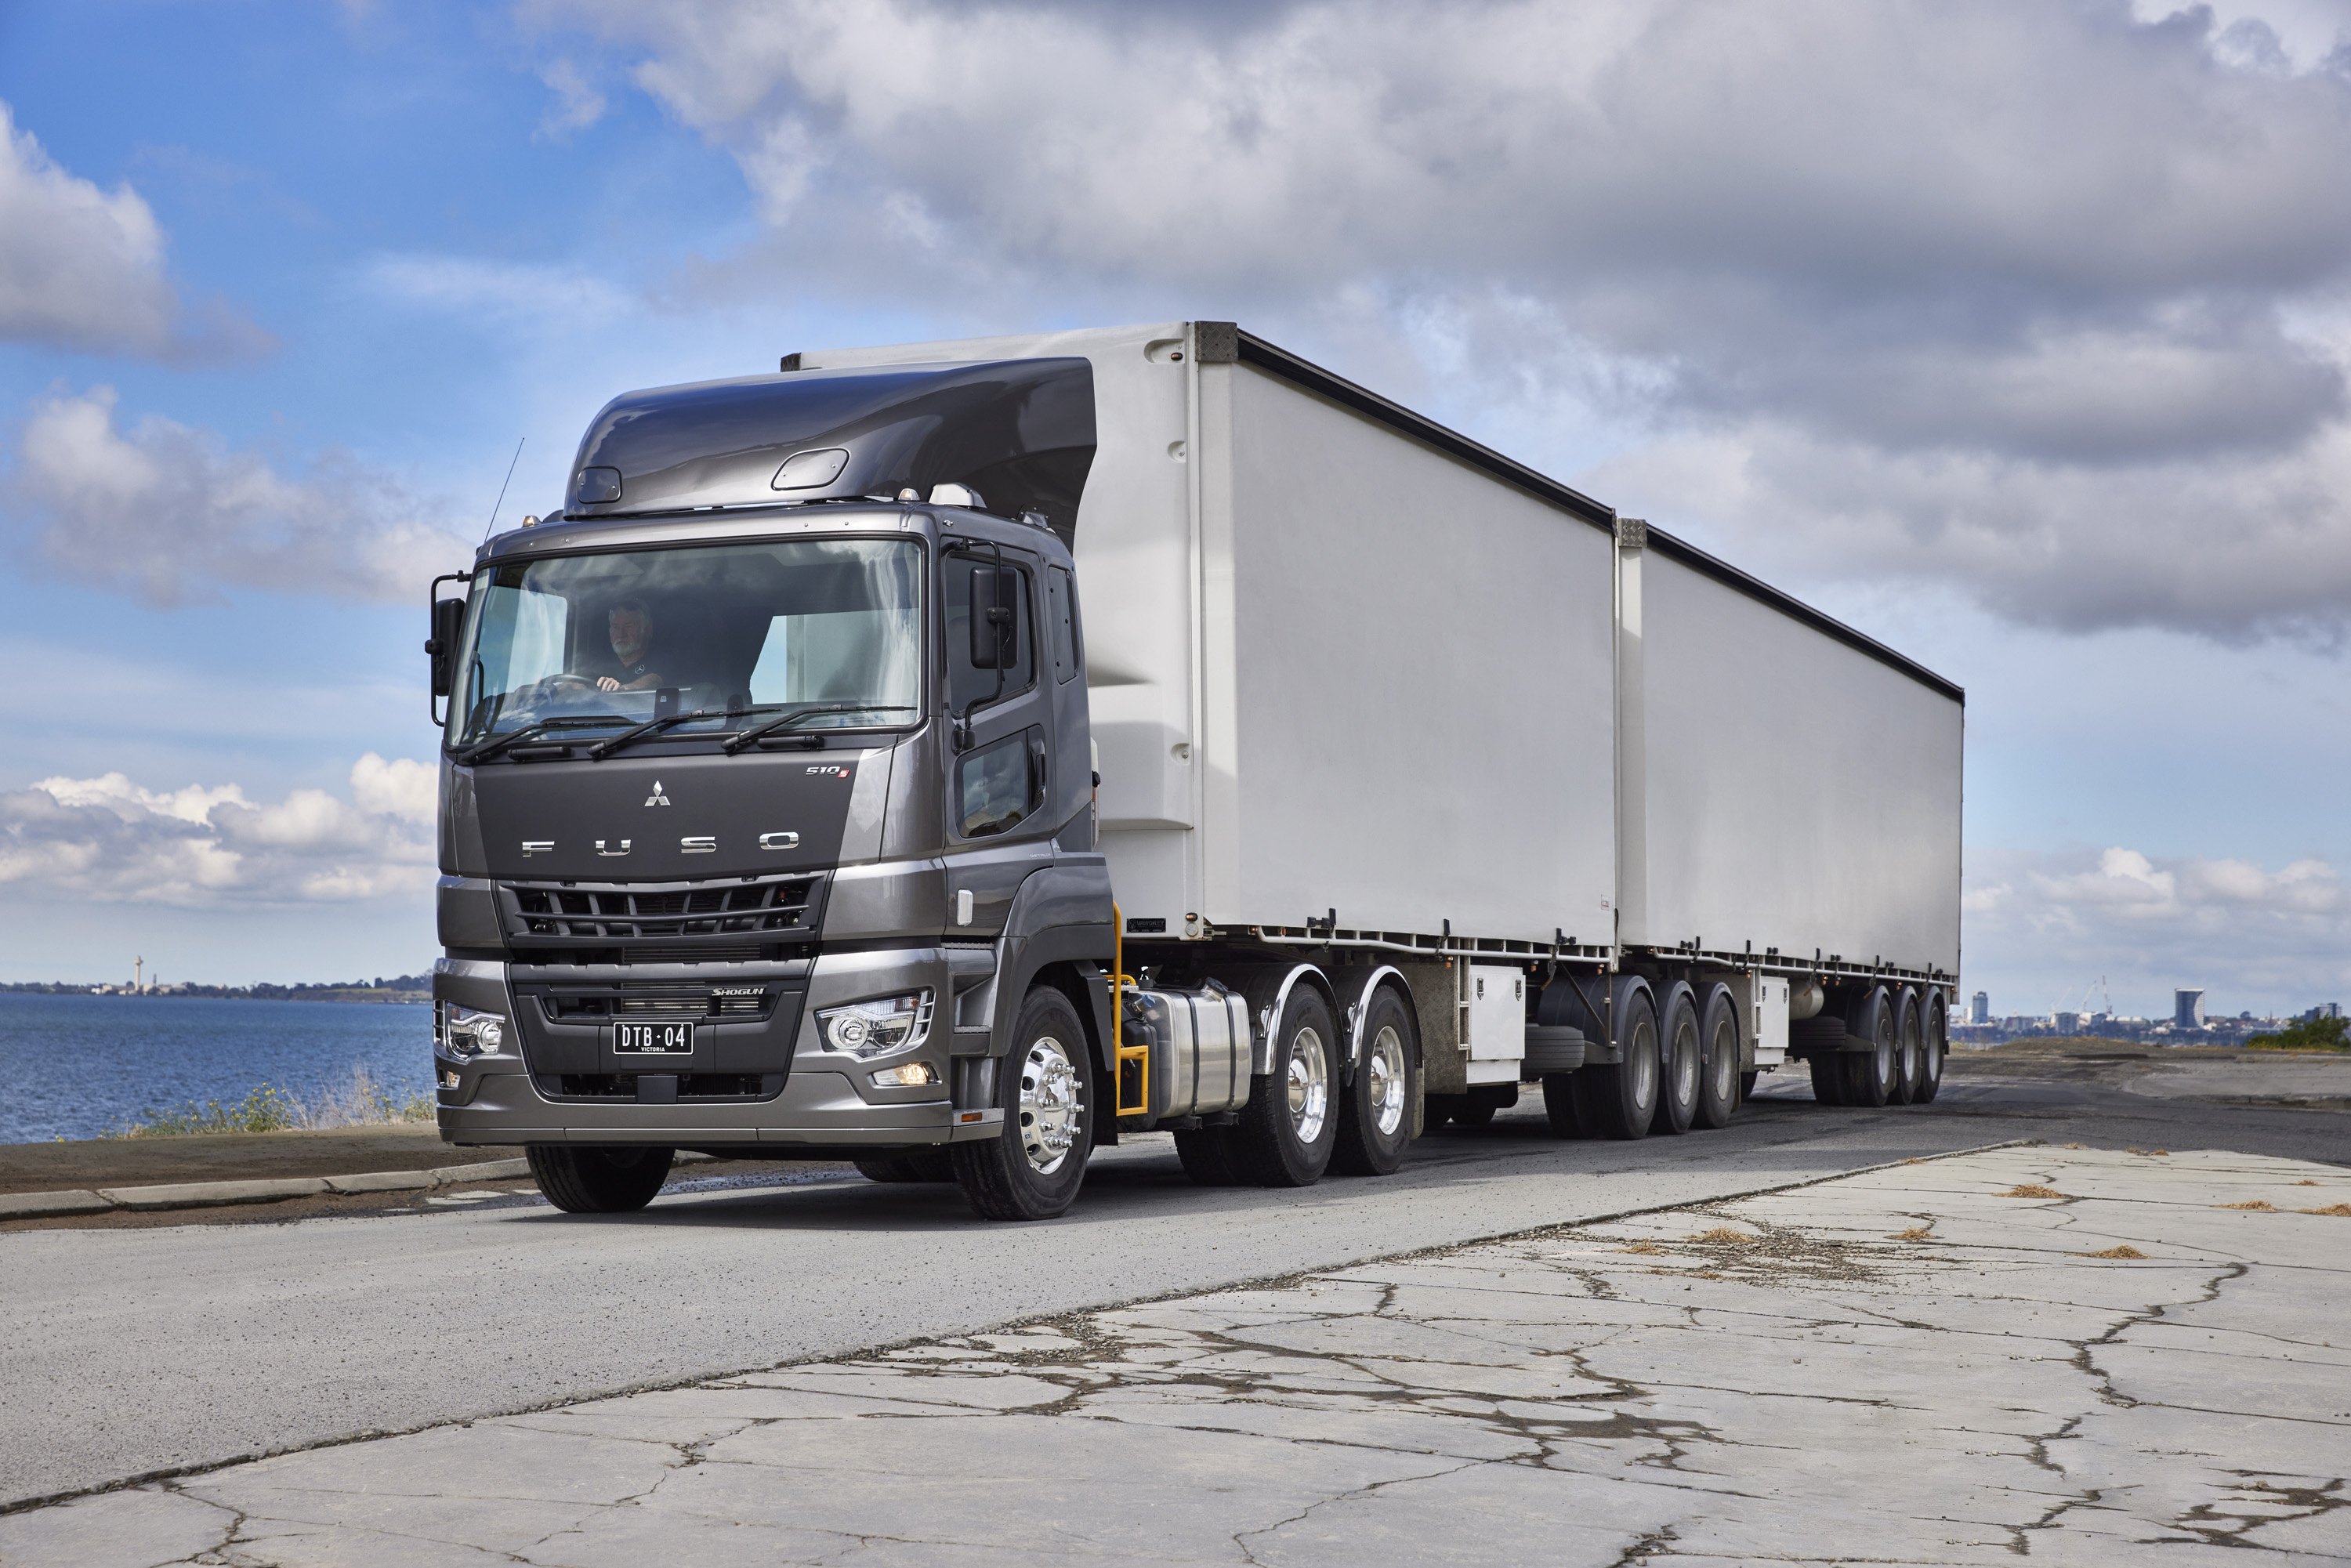 Australia’s most powerful Japanese truck is award finalist